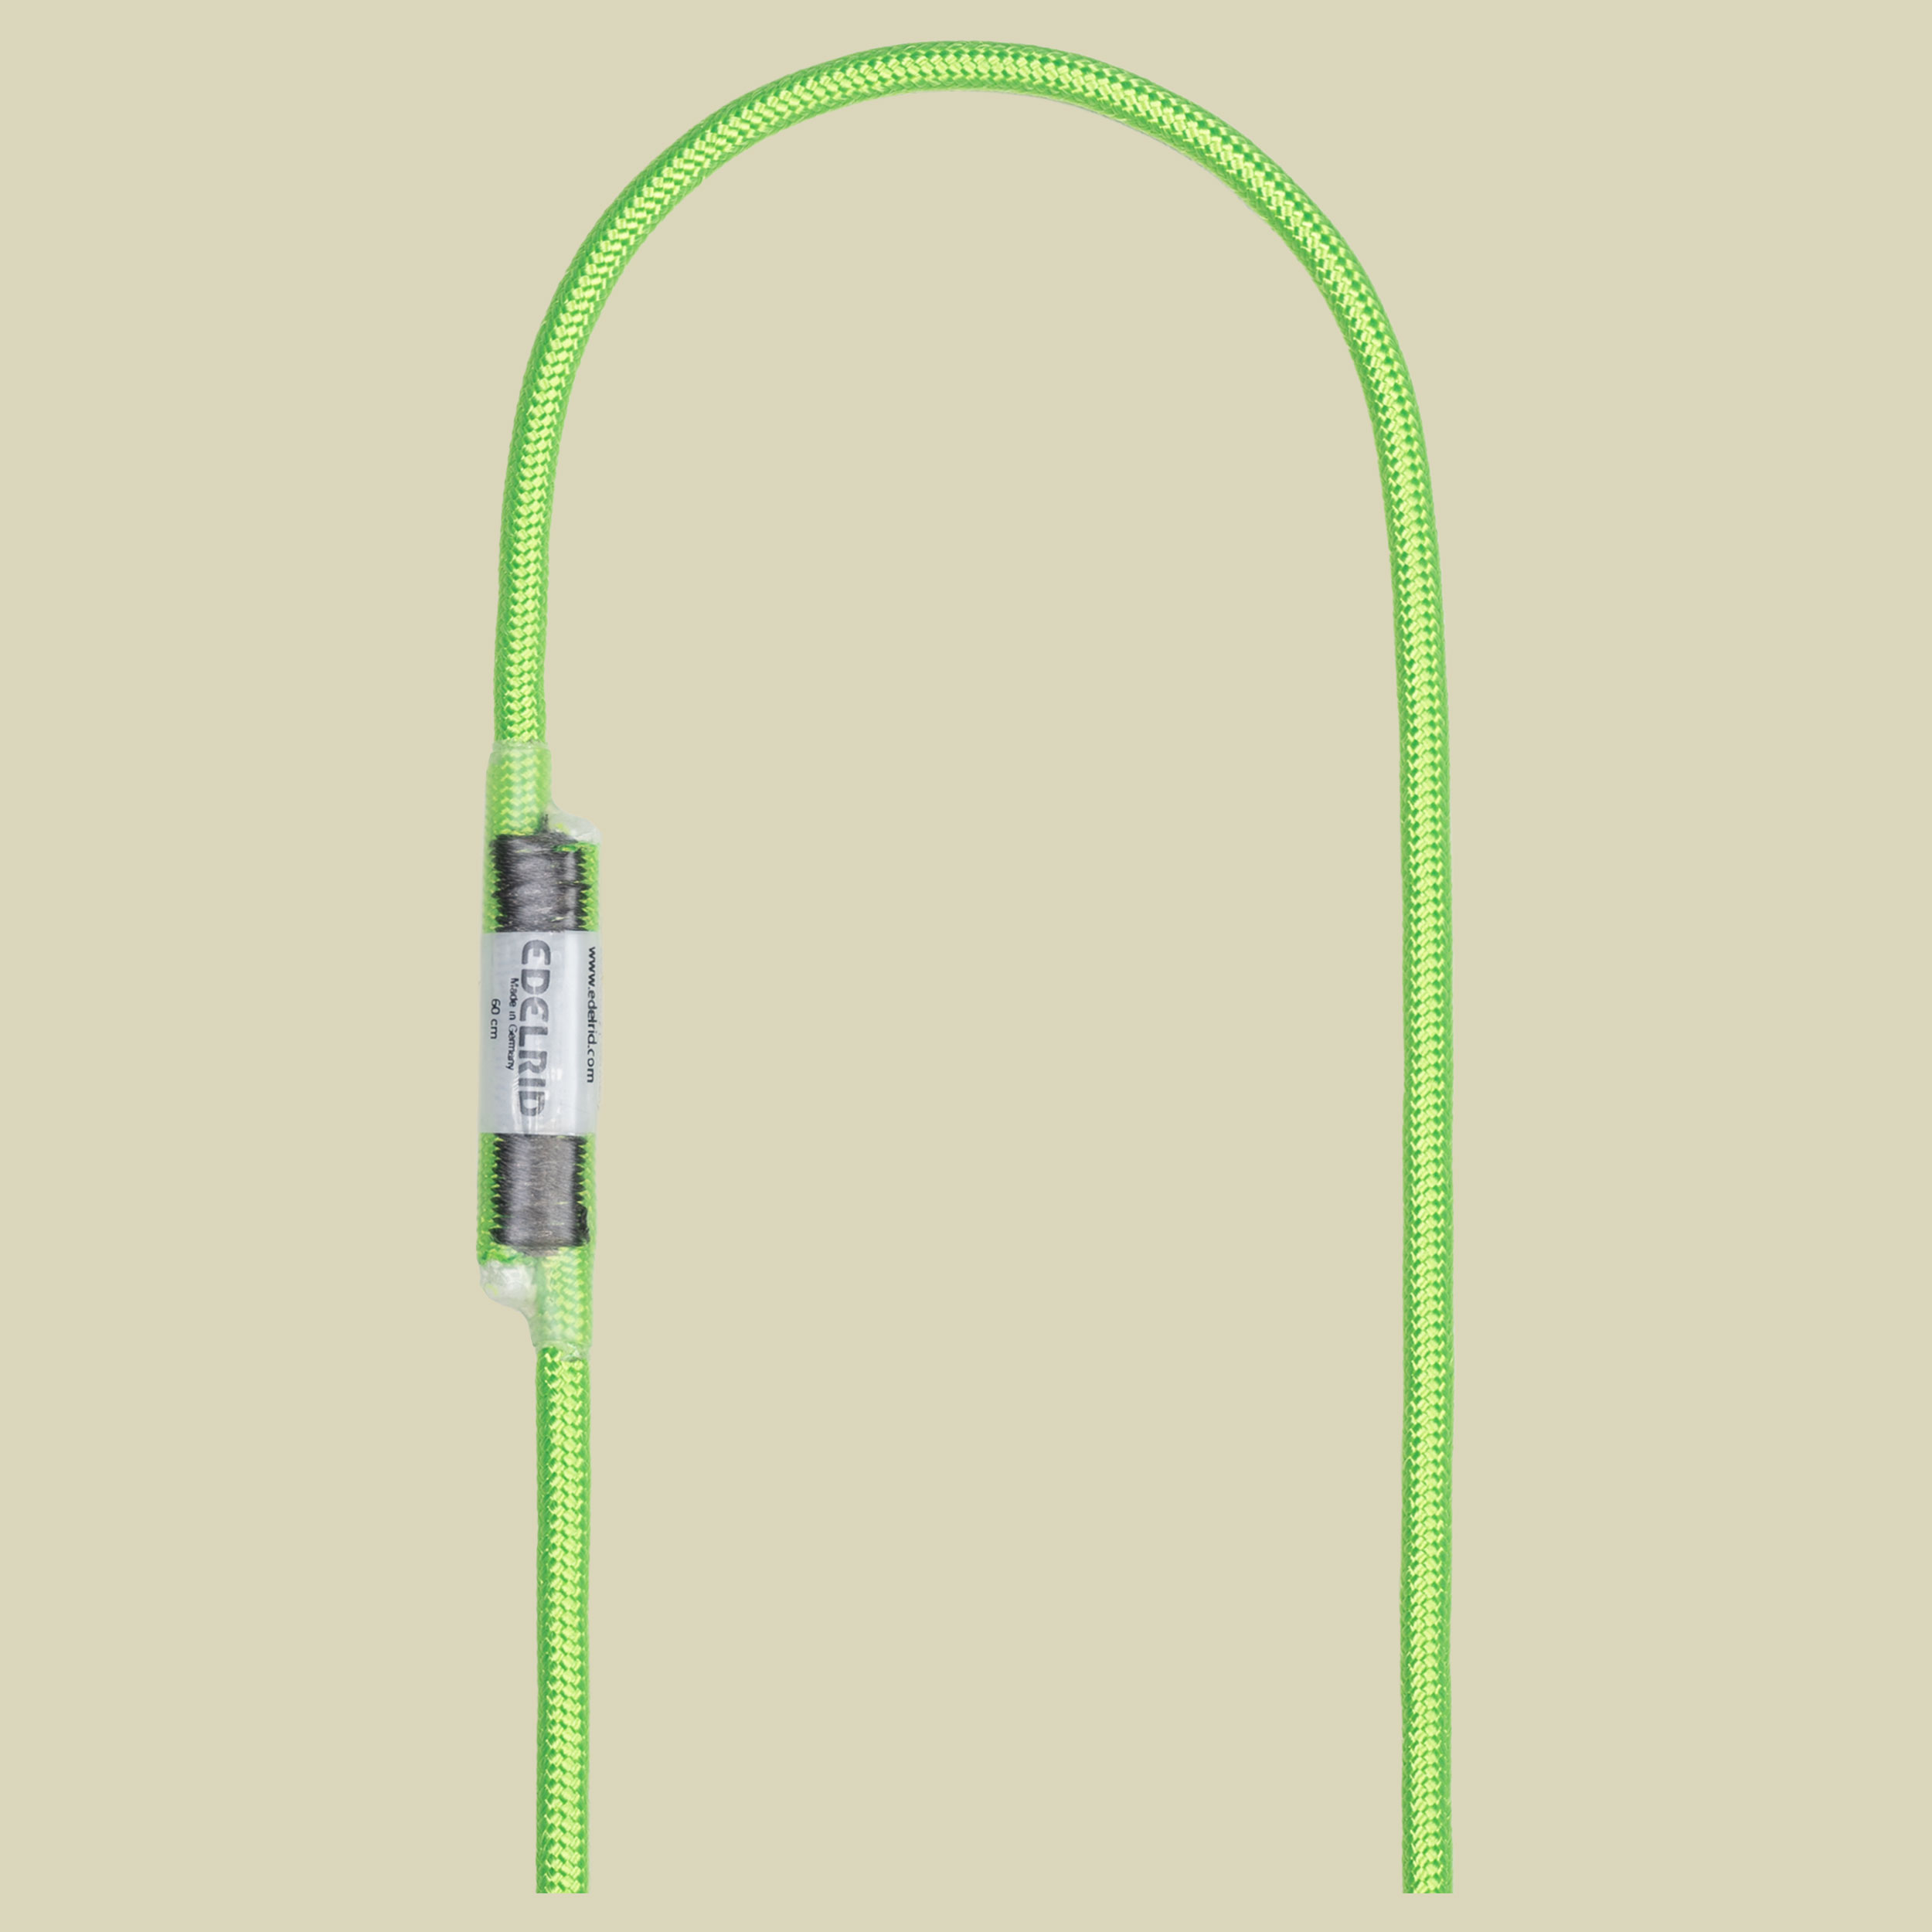 HMPE Cord Slng 6mm 60 cm grün - neon green